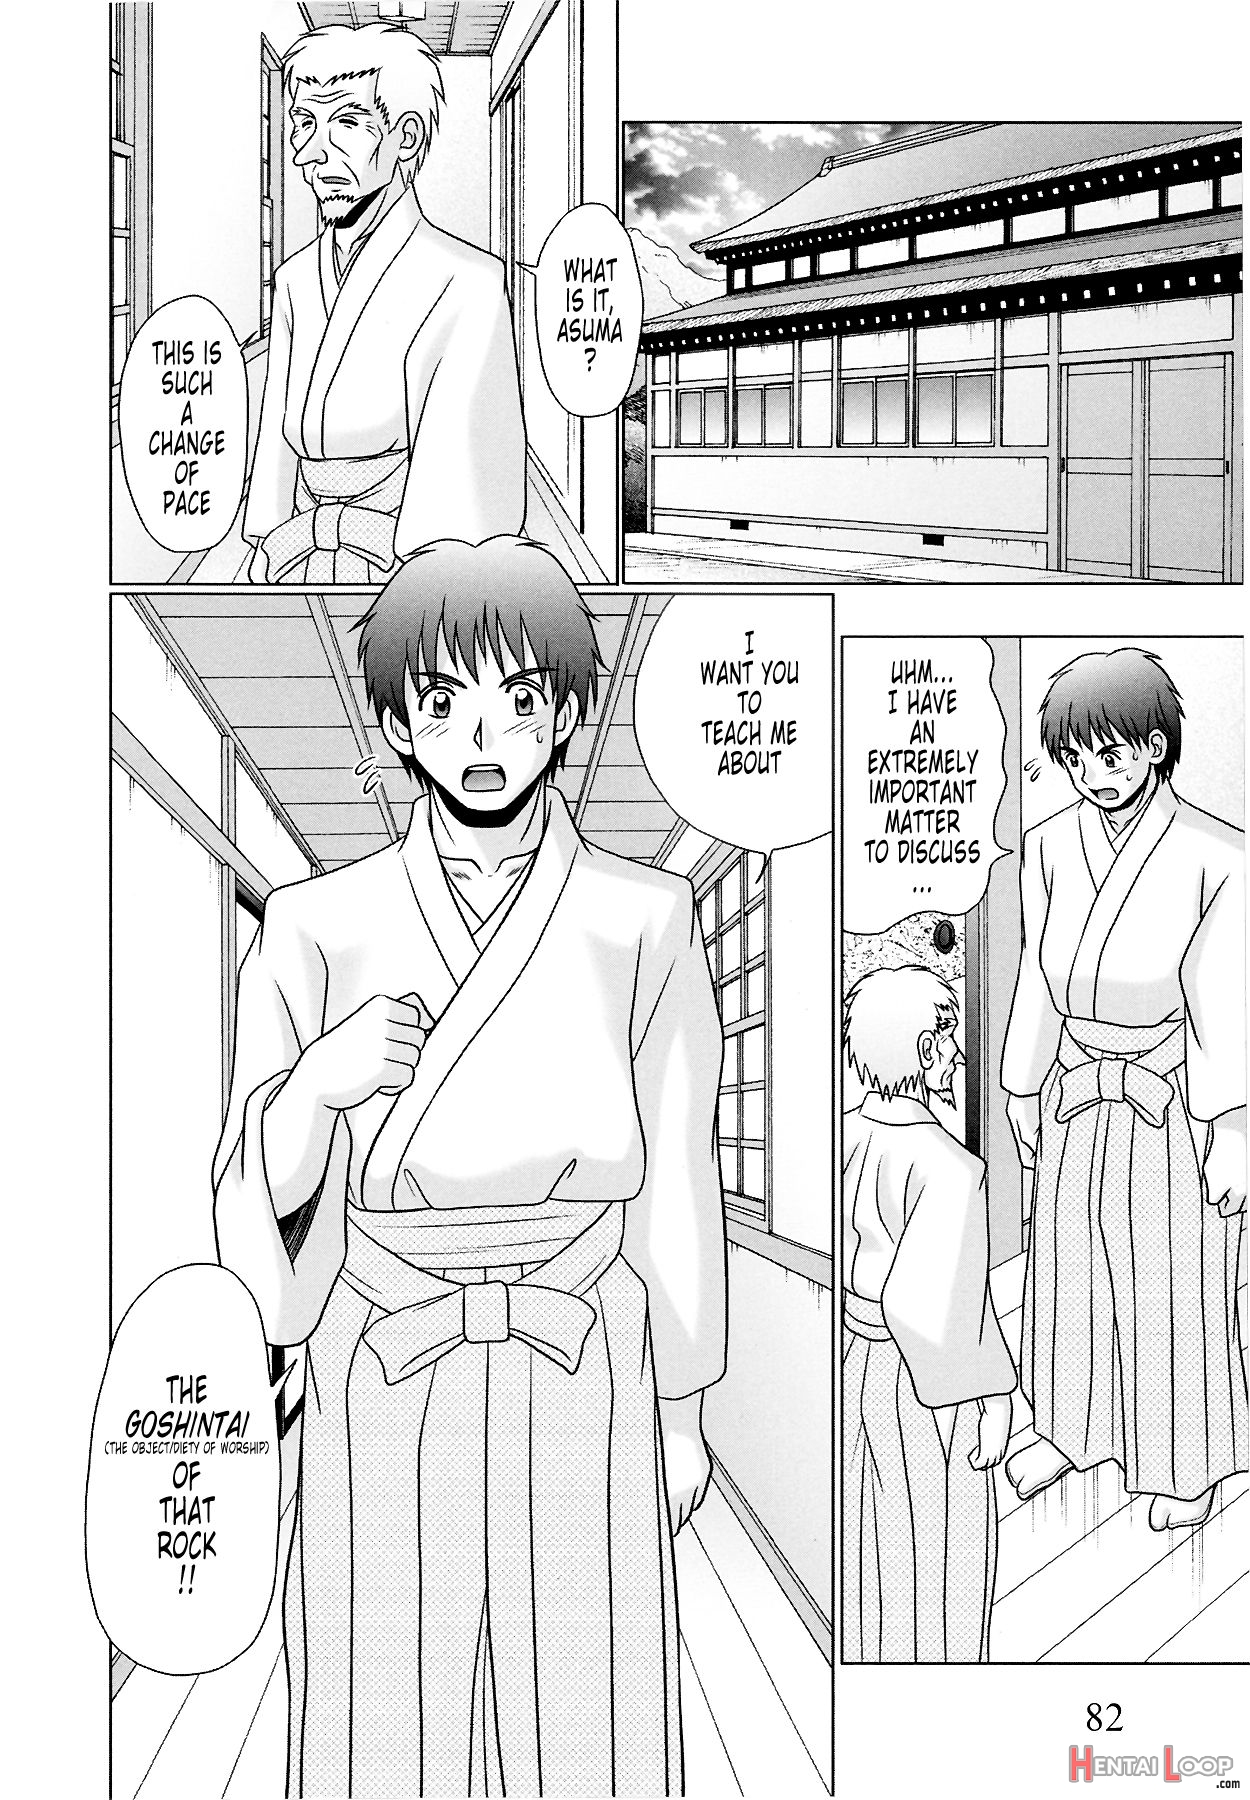 Tsukumimi 1&2 page 294